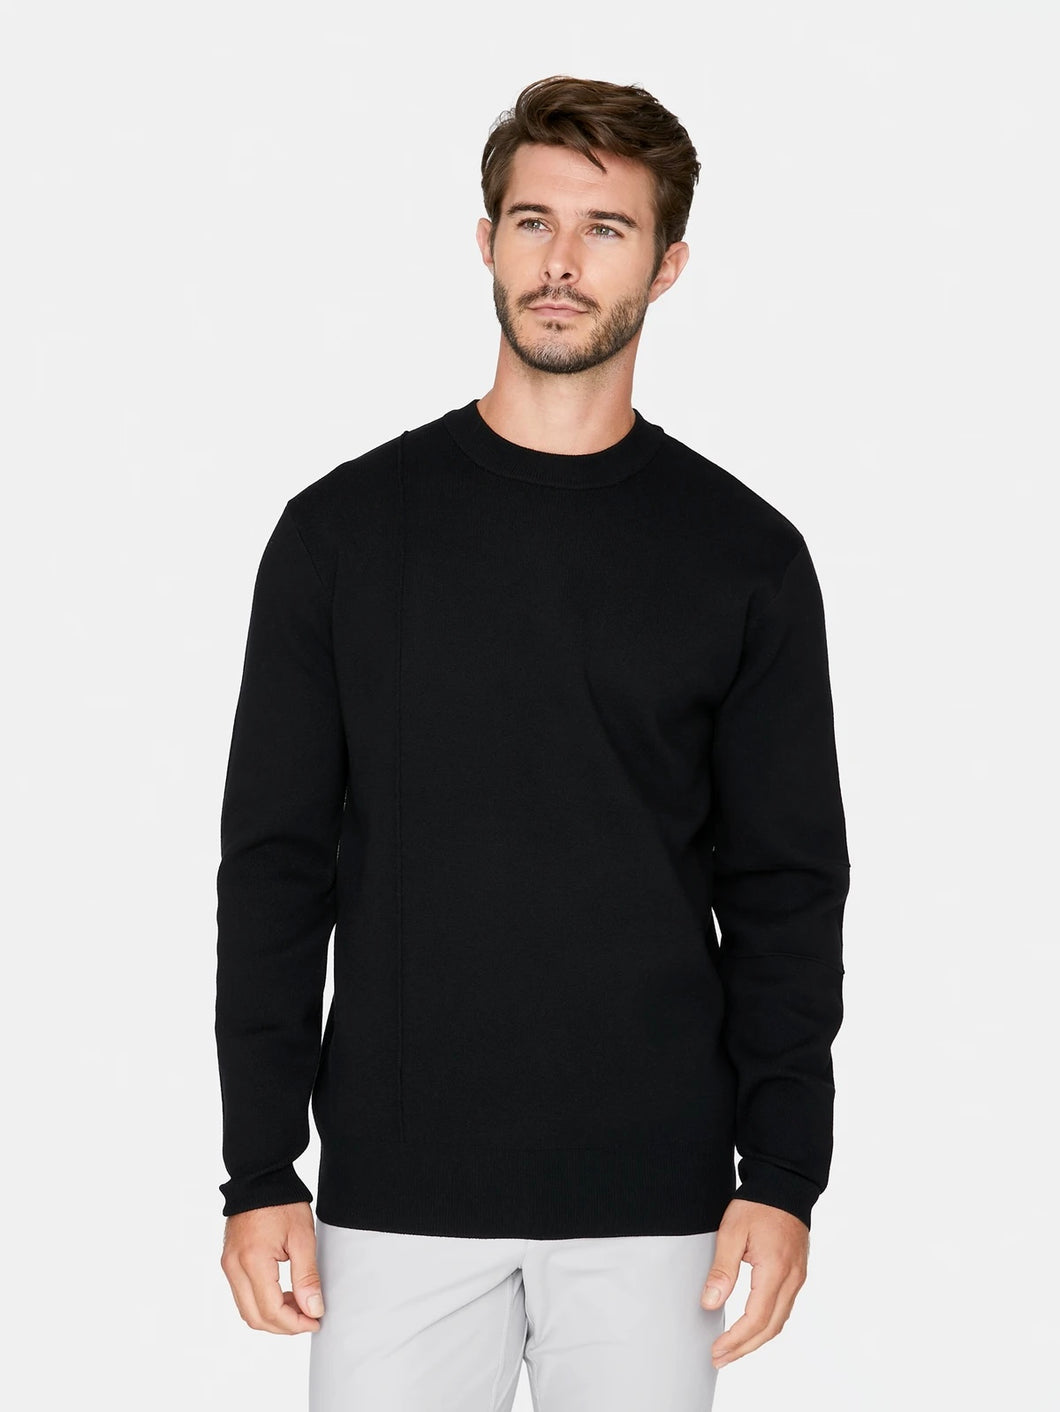 7Diamonds Railay Beach Sweater